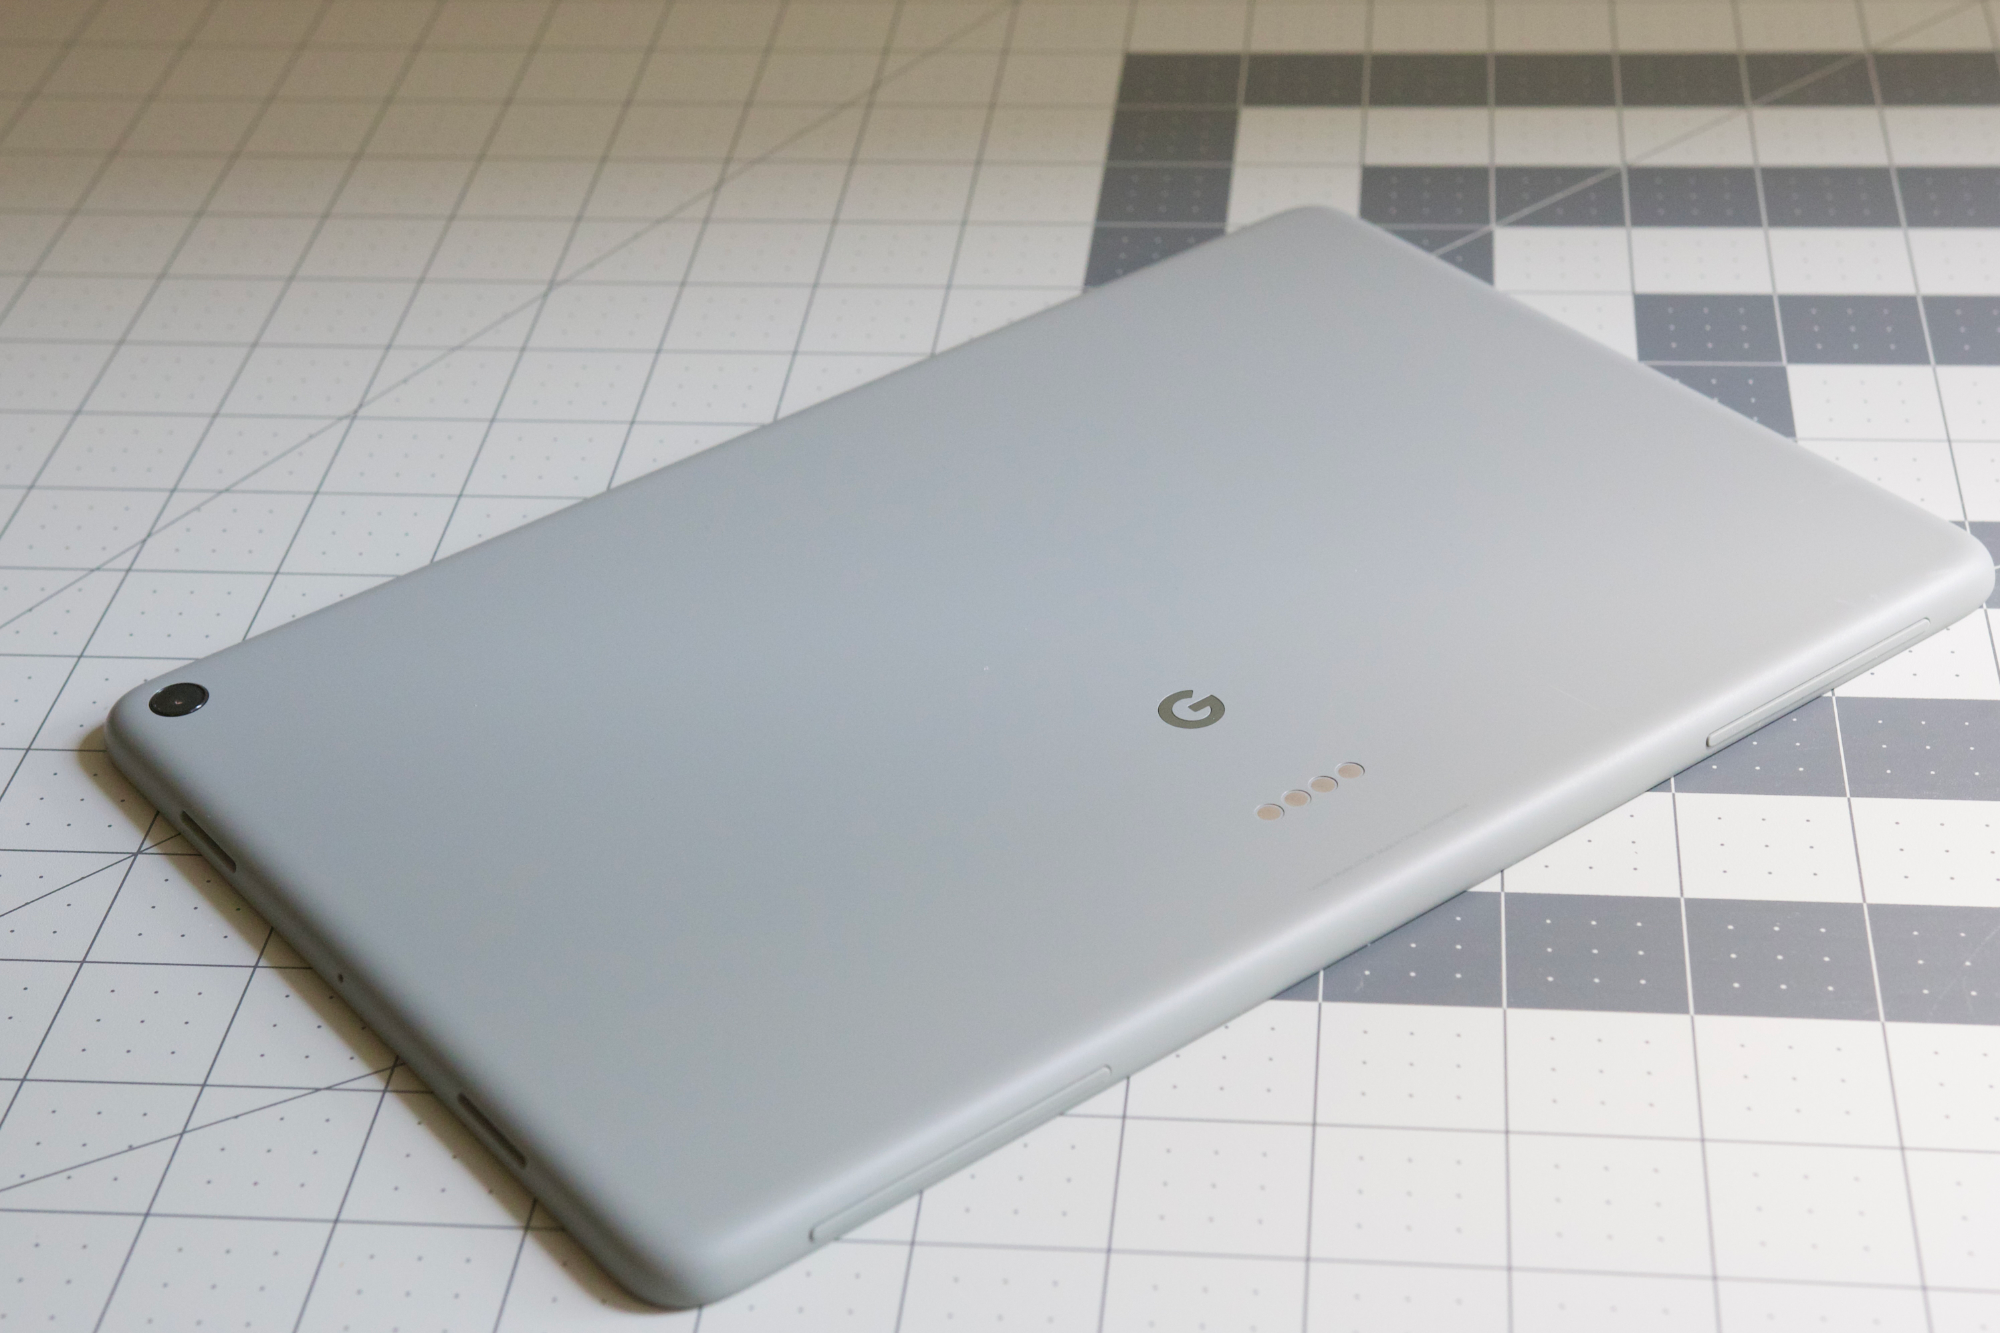 The Google Pixel Tablet on a desk, showing its back